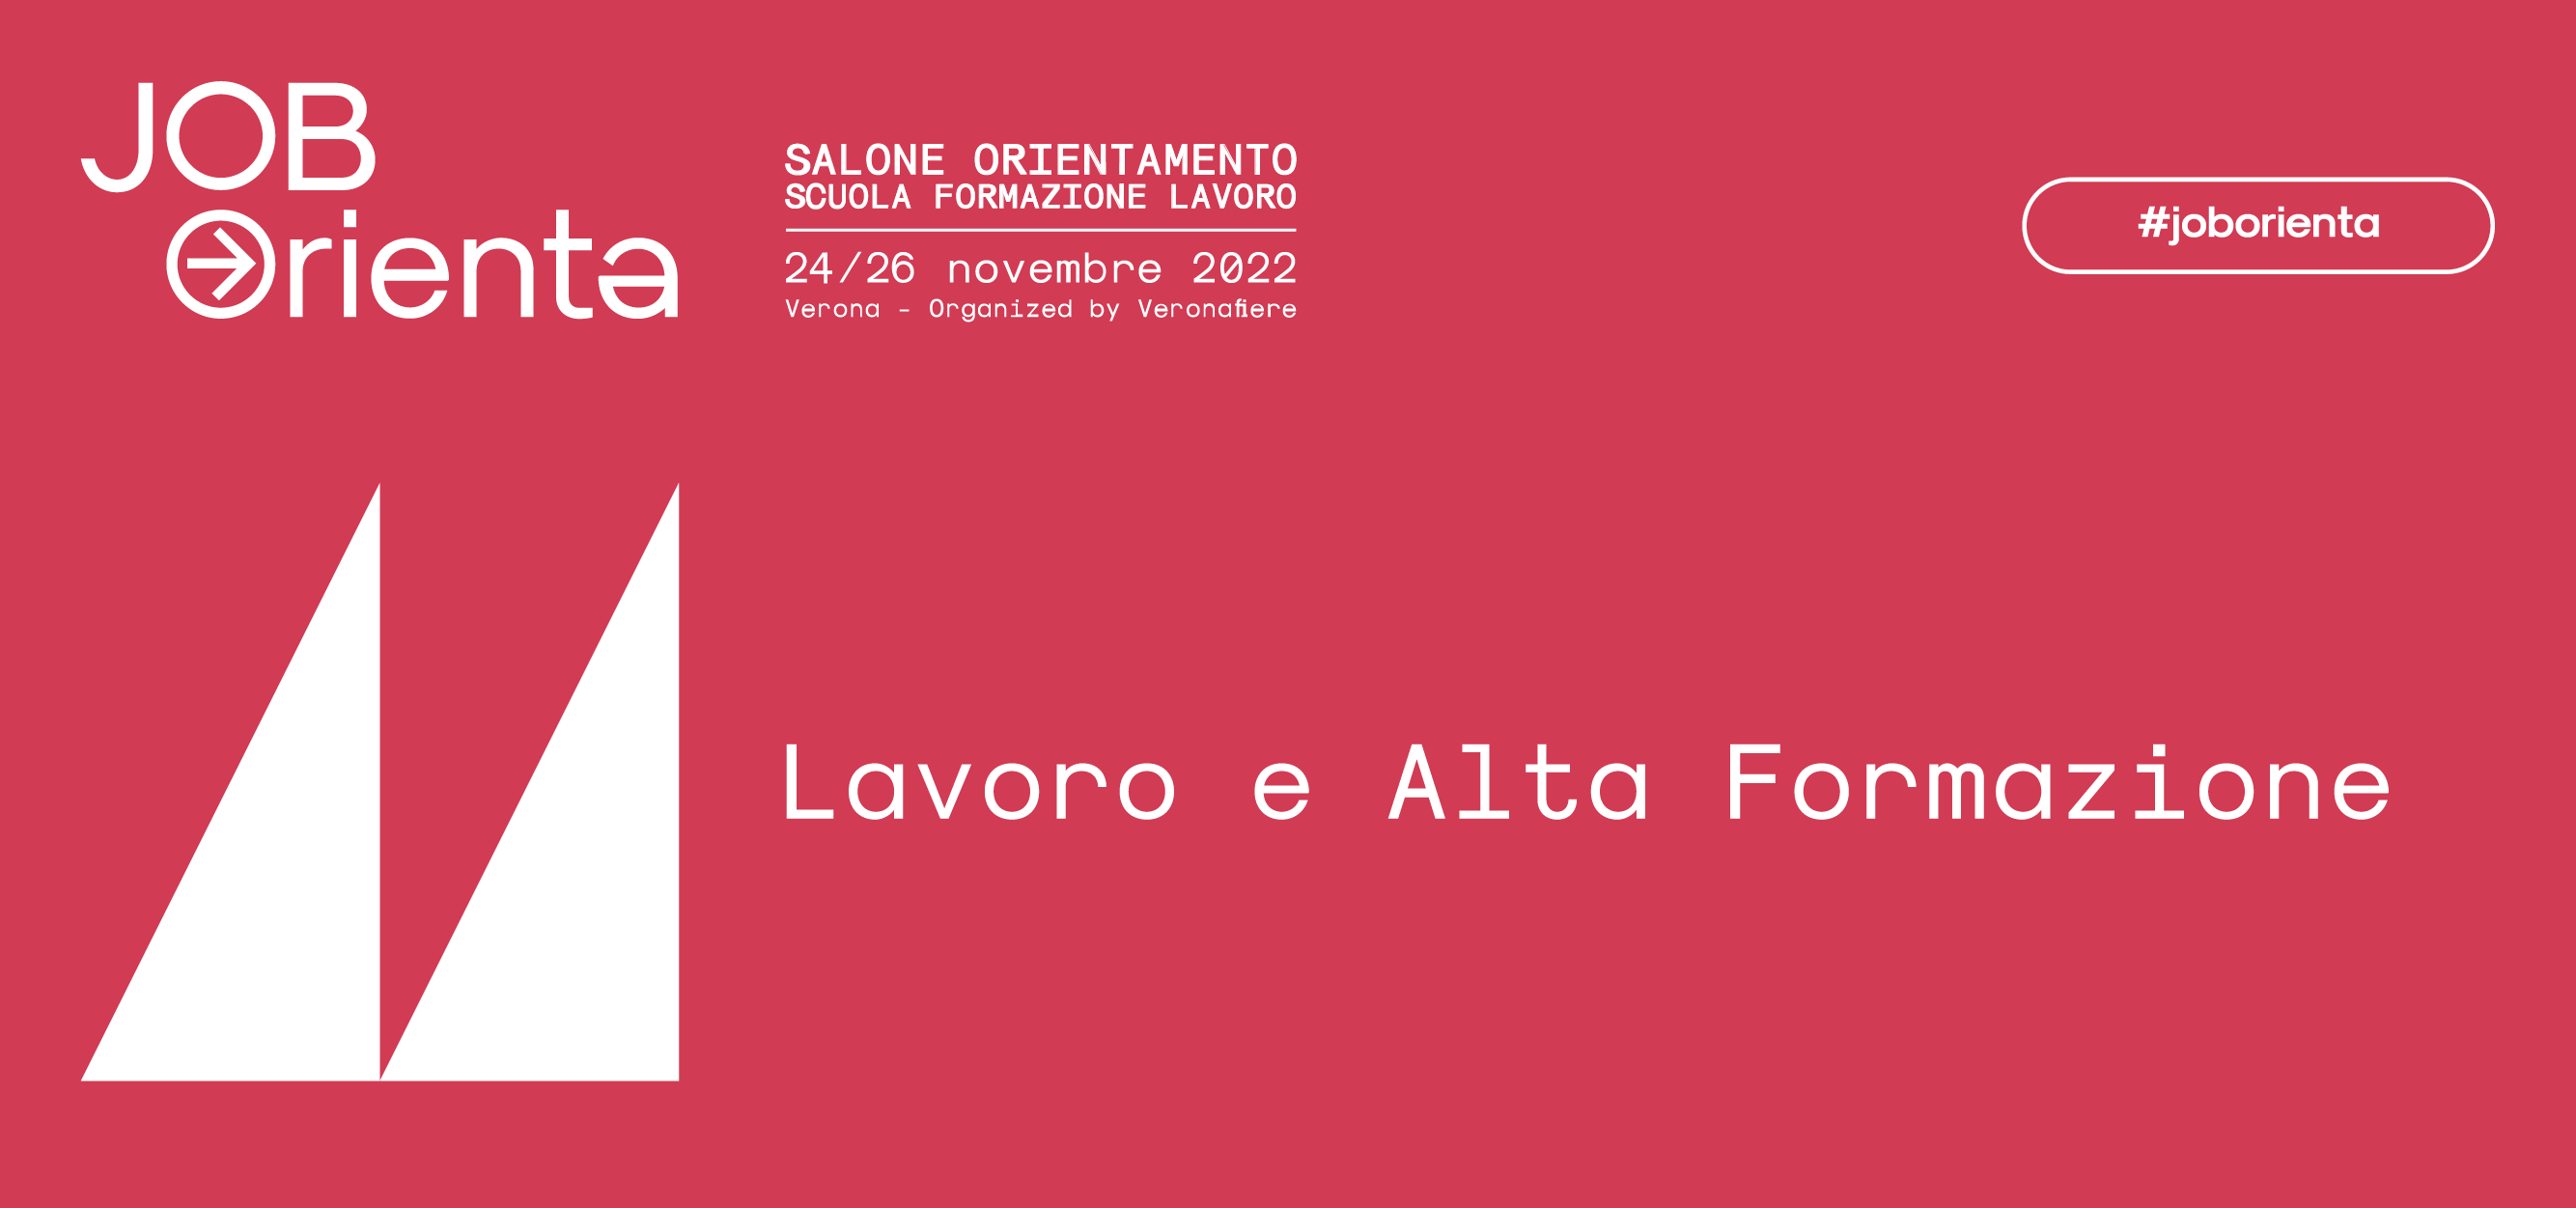 JOB&ORIENTA Verona 24/26 novembre 2022